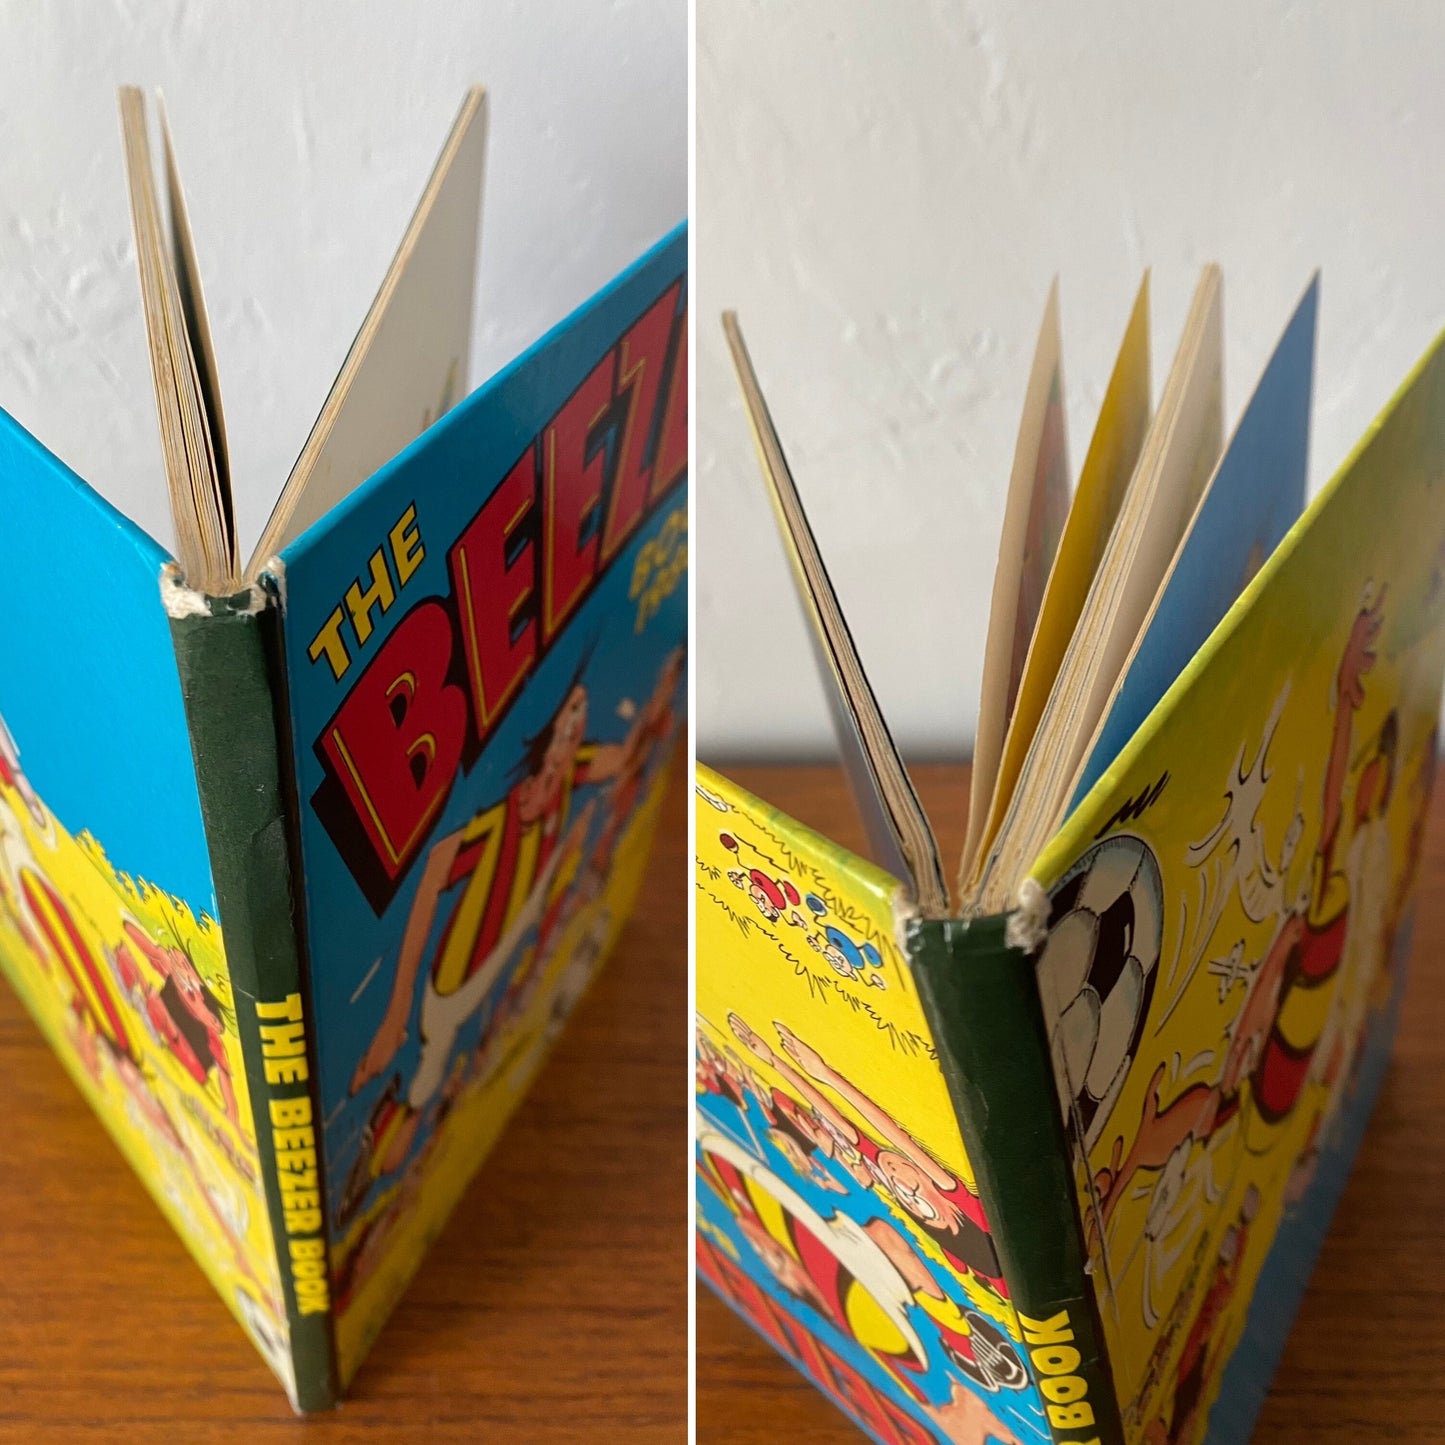 Vintage Beezer Book 1980. Children’s comic annual. Great nostalgic gift idea.